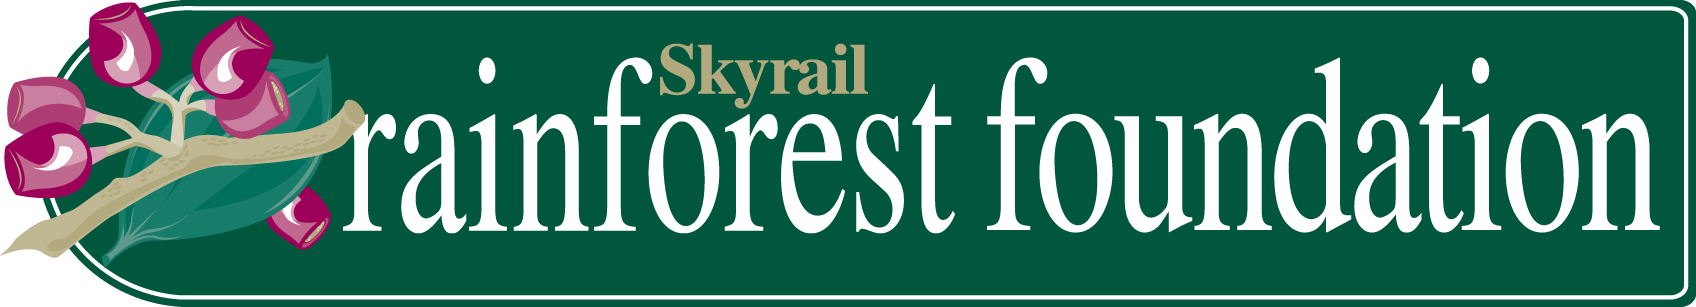 Skyrail Rainforest Foundation horizontal logo